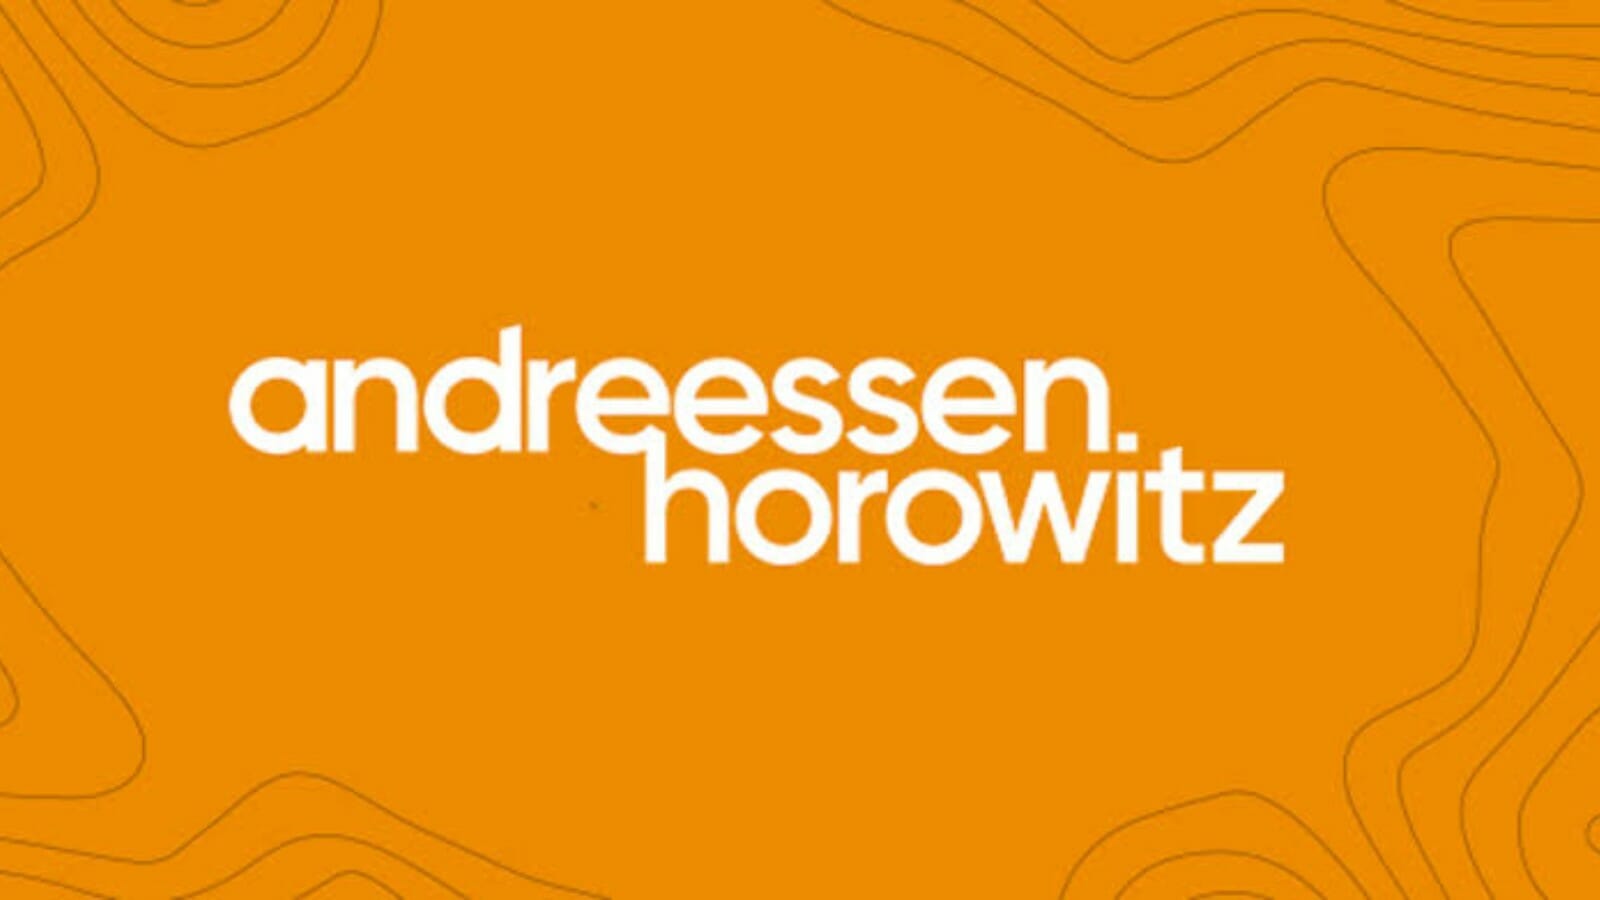 The VC firm Andreessen Horowitz 